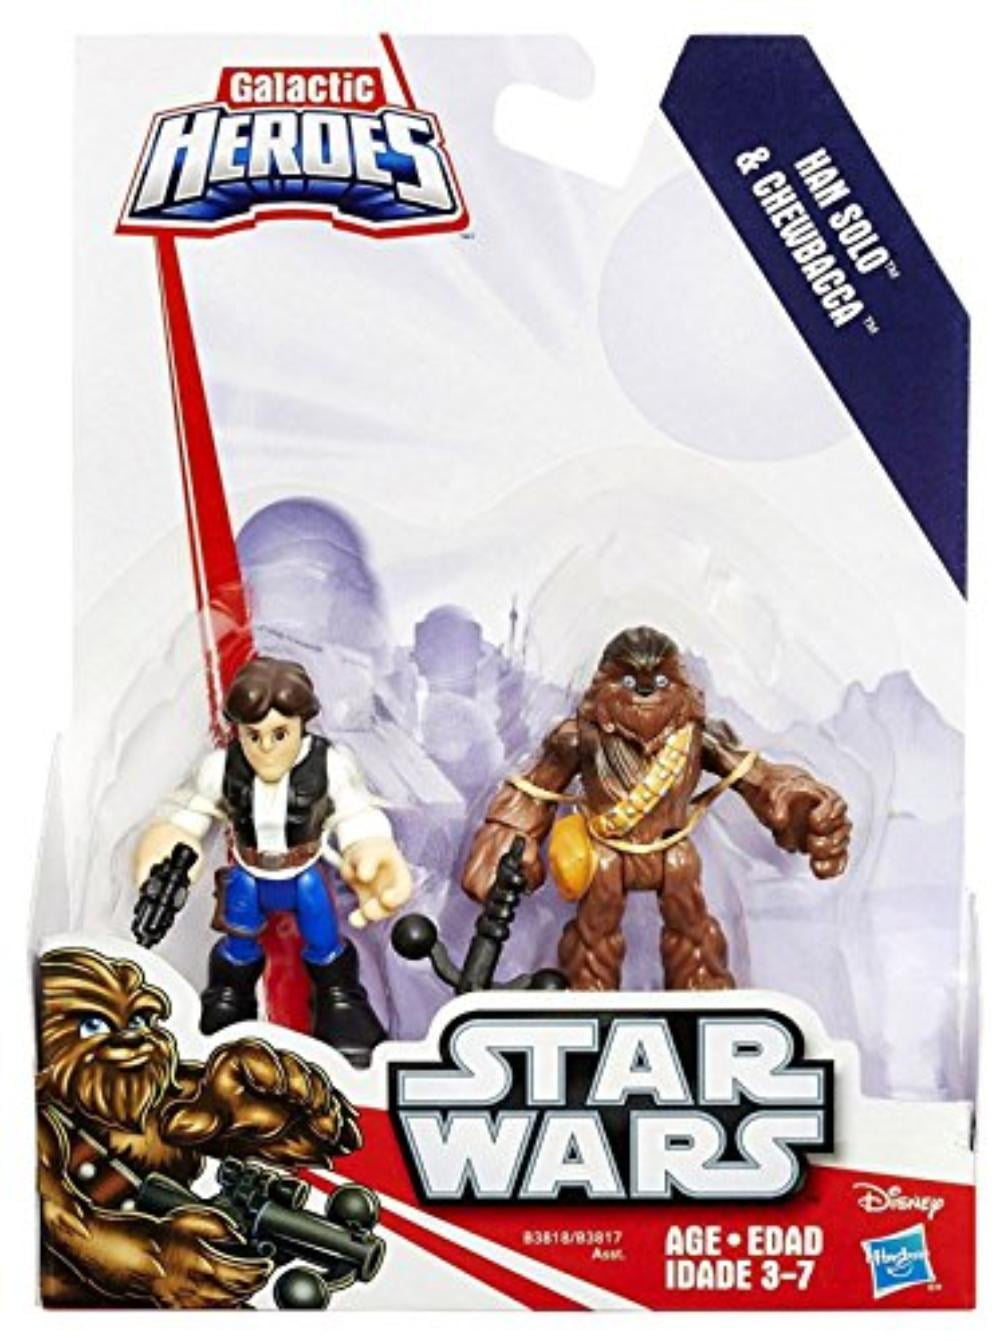 Playskool Heroes Star Wars Galactic Heroes Han Solo and Chewbacca 